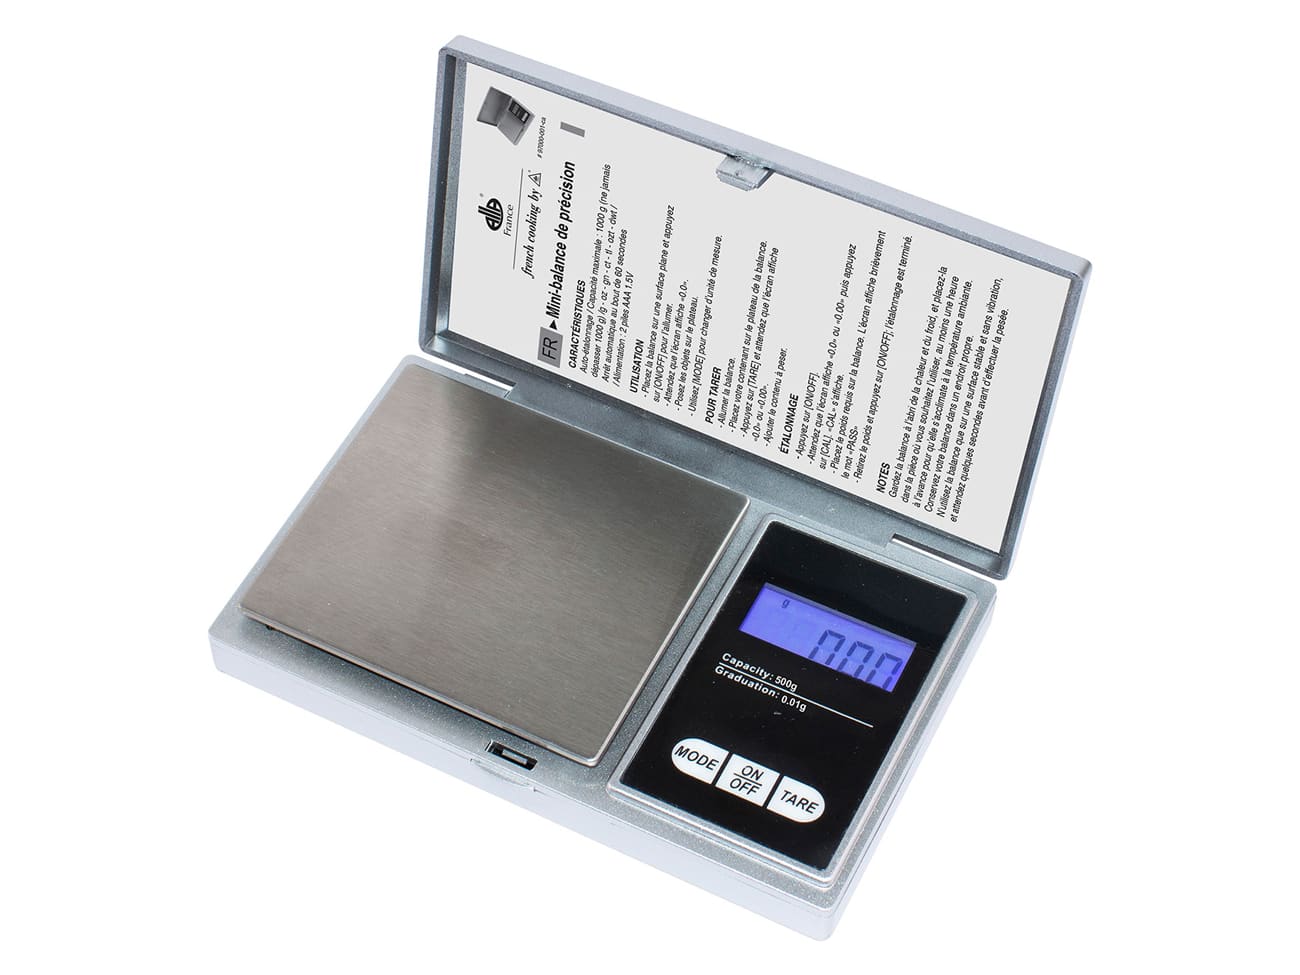 Tomado TKS0101S - Balance de cuisine - Capacité de pesée jusqu'à 10 KG - 2  piles AAA